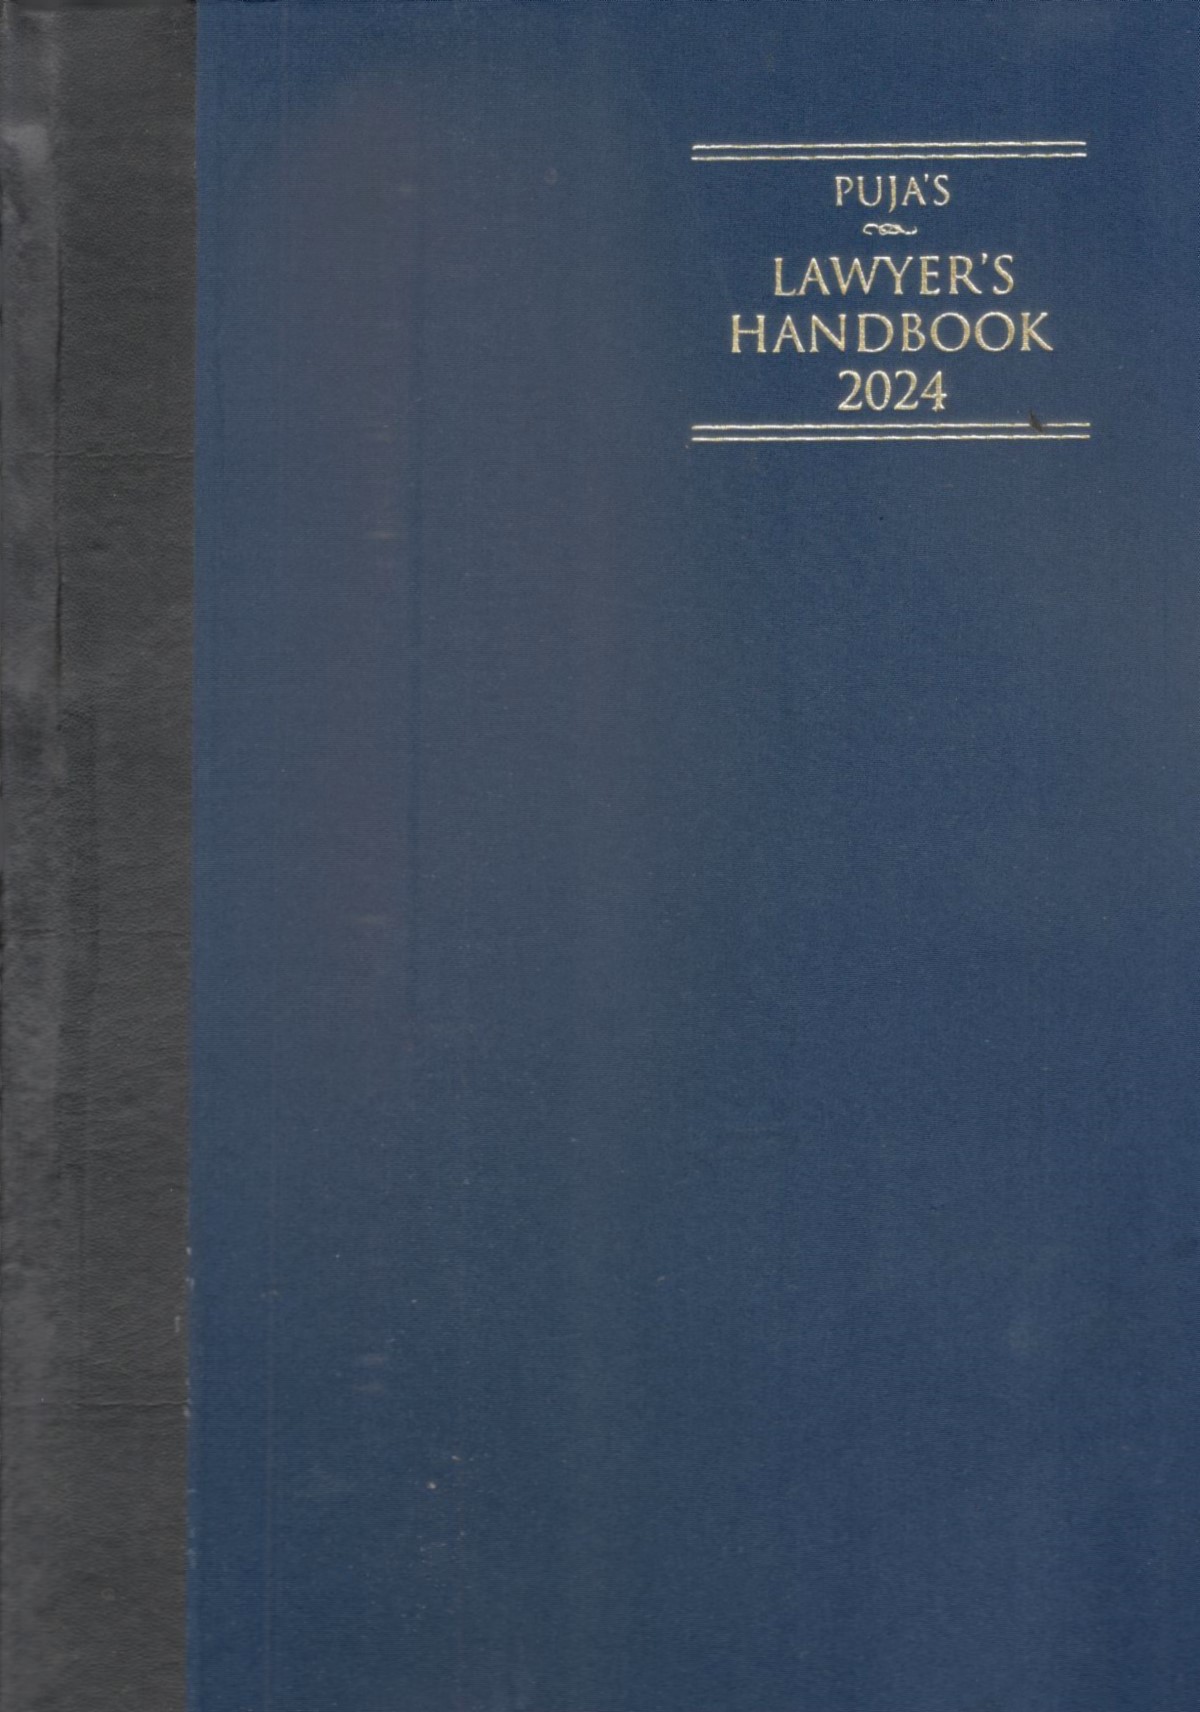 Puja’s Lawyer’s Handbook 2024 - Register Blue